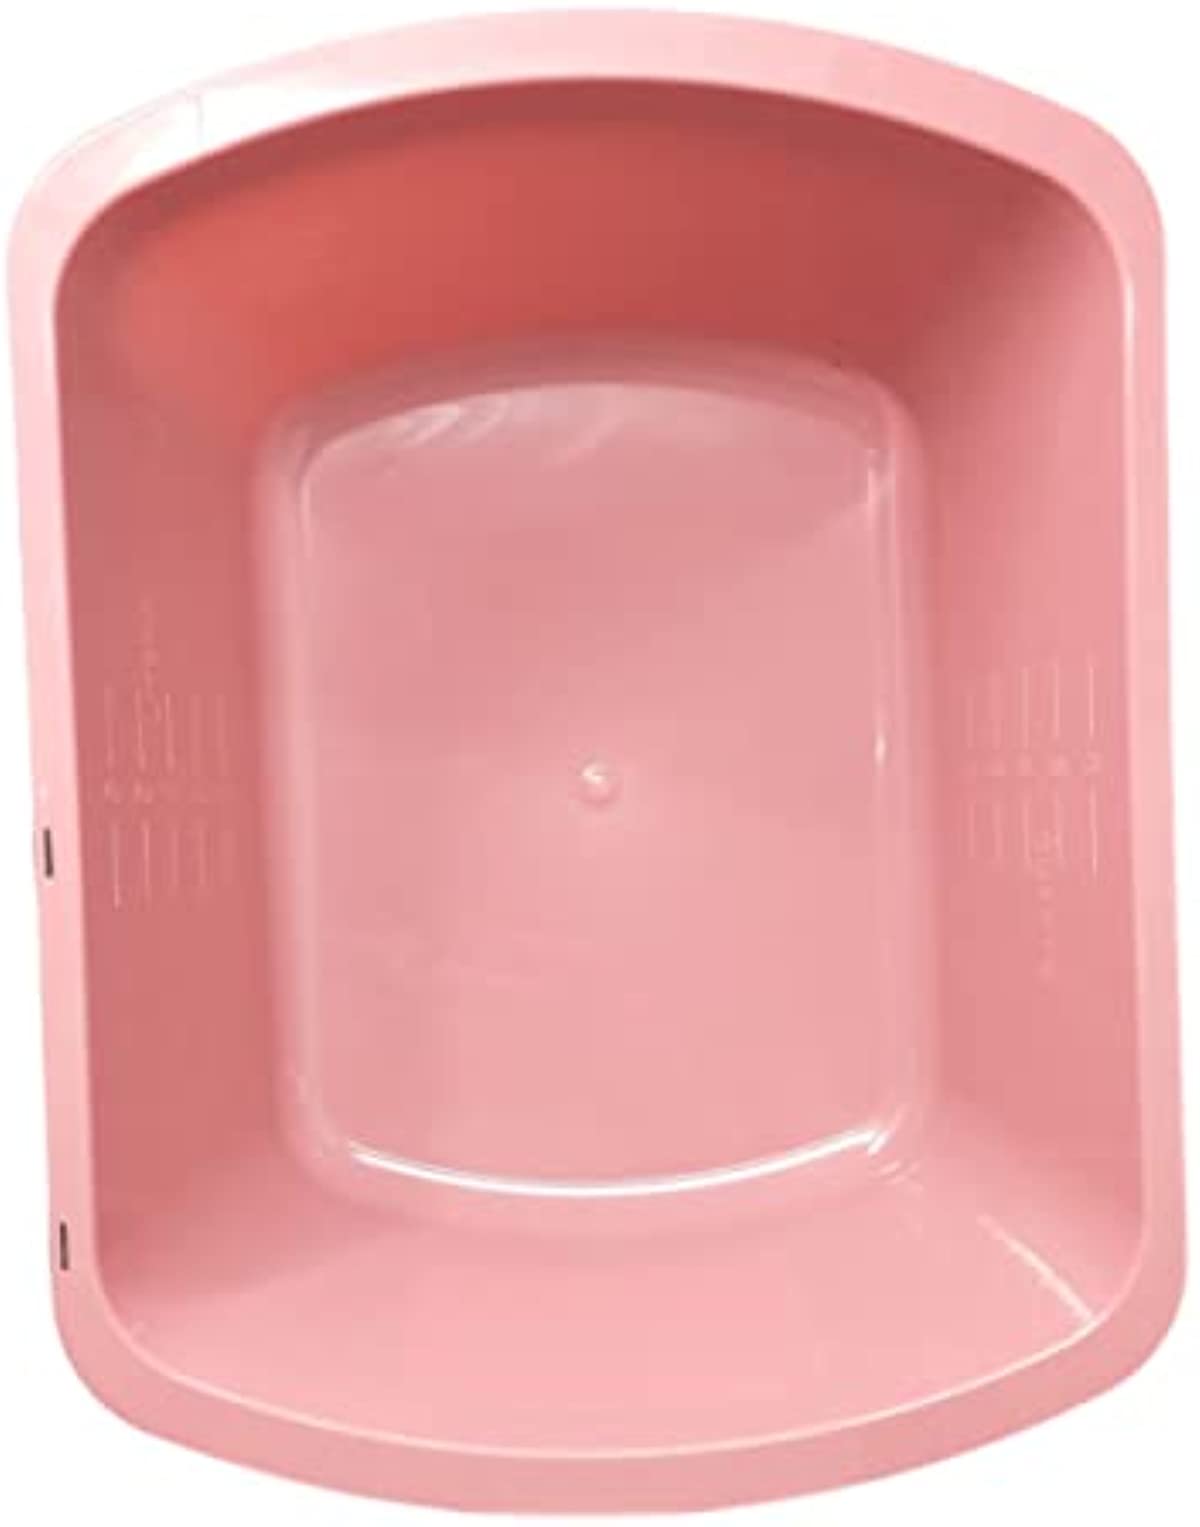 Wash Basins – Rectangular Plastic Hospital Bedside Soaking Tub [1 Pack] Small 7 Quart Graduated Bucket - Portable Washbasin for Washing, Cleaning, Foot Bath, Washing Dishes, Face Cleansing Bowl